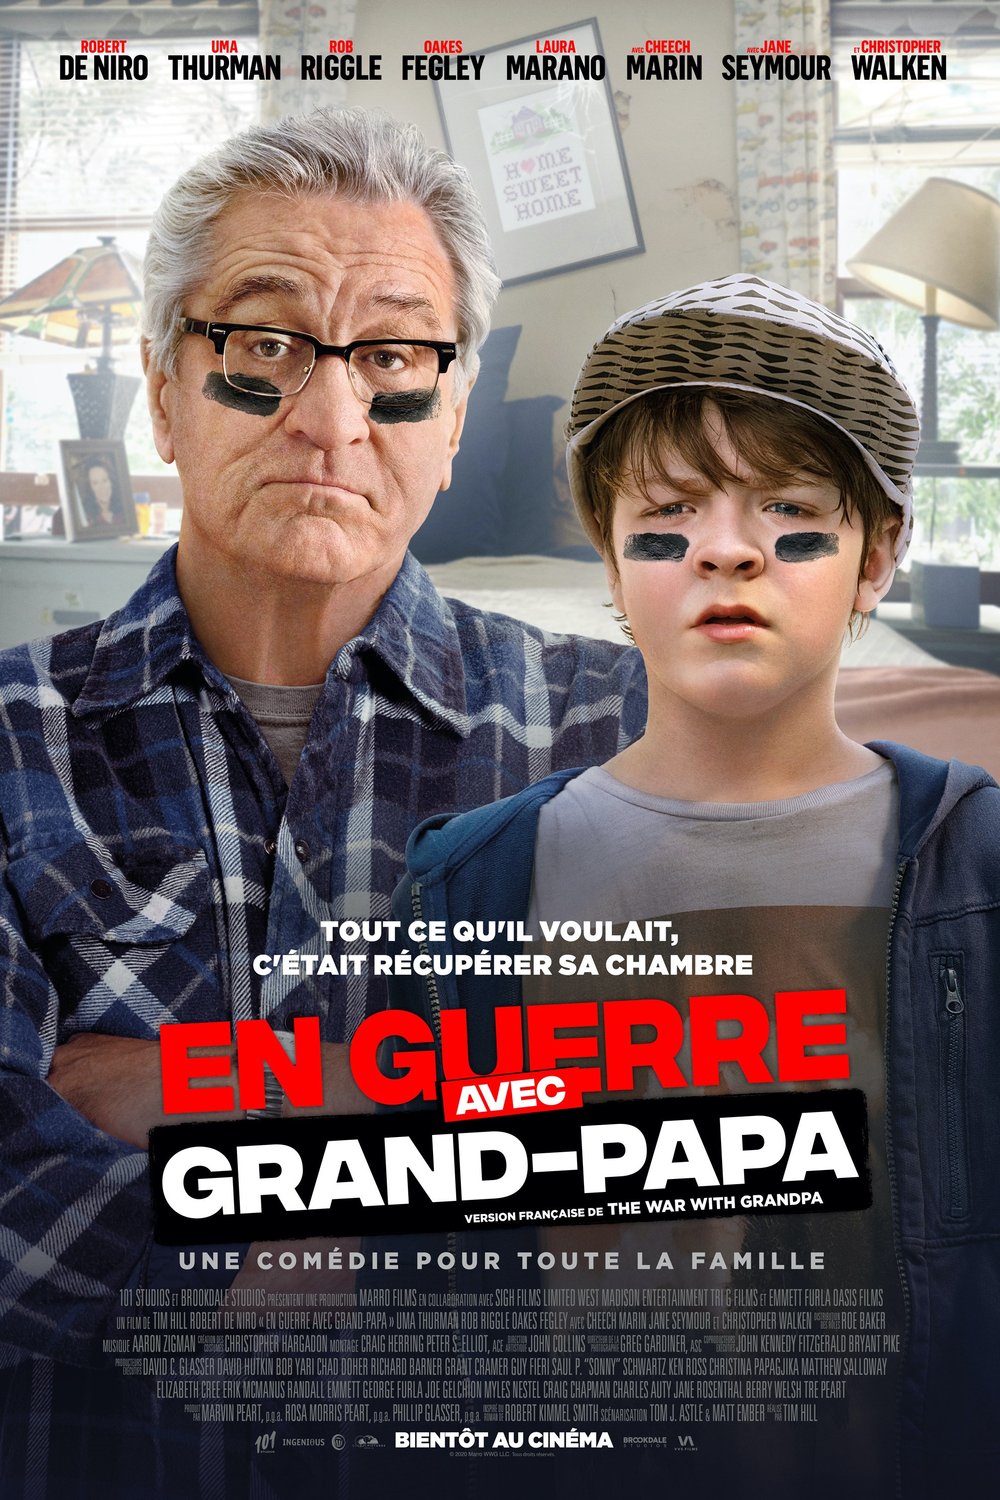 Poster of the movie En guerre avec grand-papa